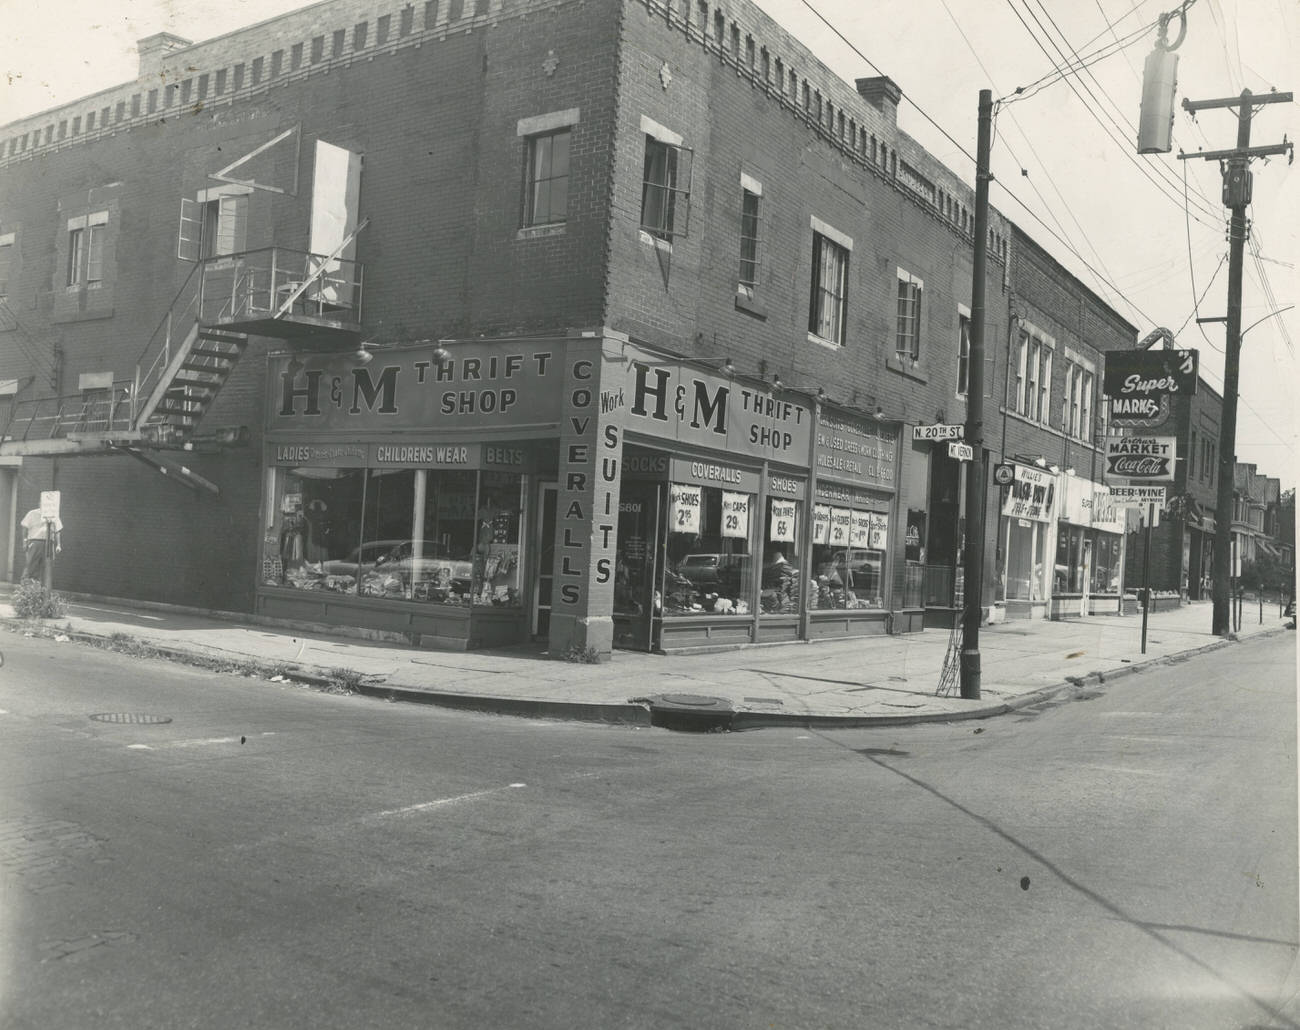 H & M Thrift Shop at the corner of Mt. Vernon Avenue and North Twentieth Street, circa 1950.